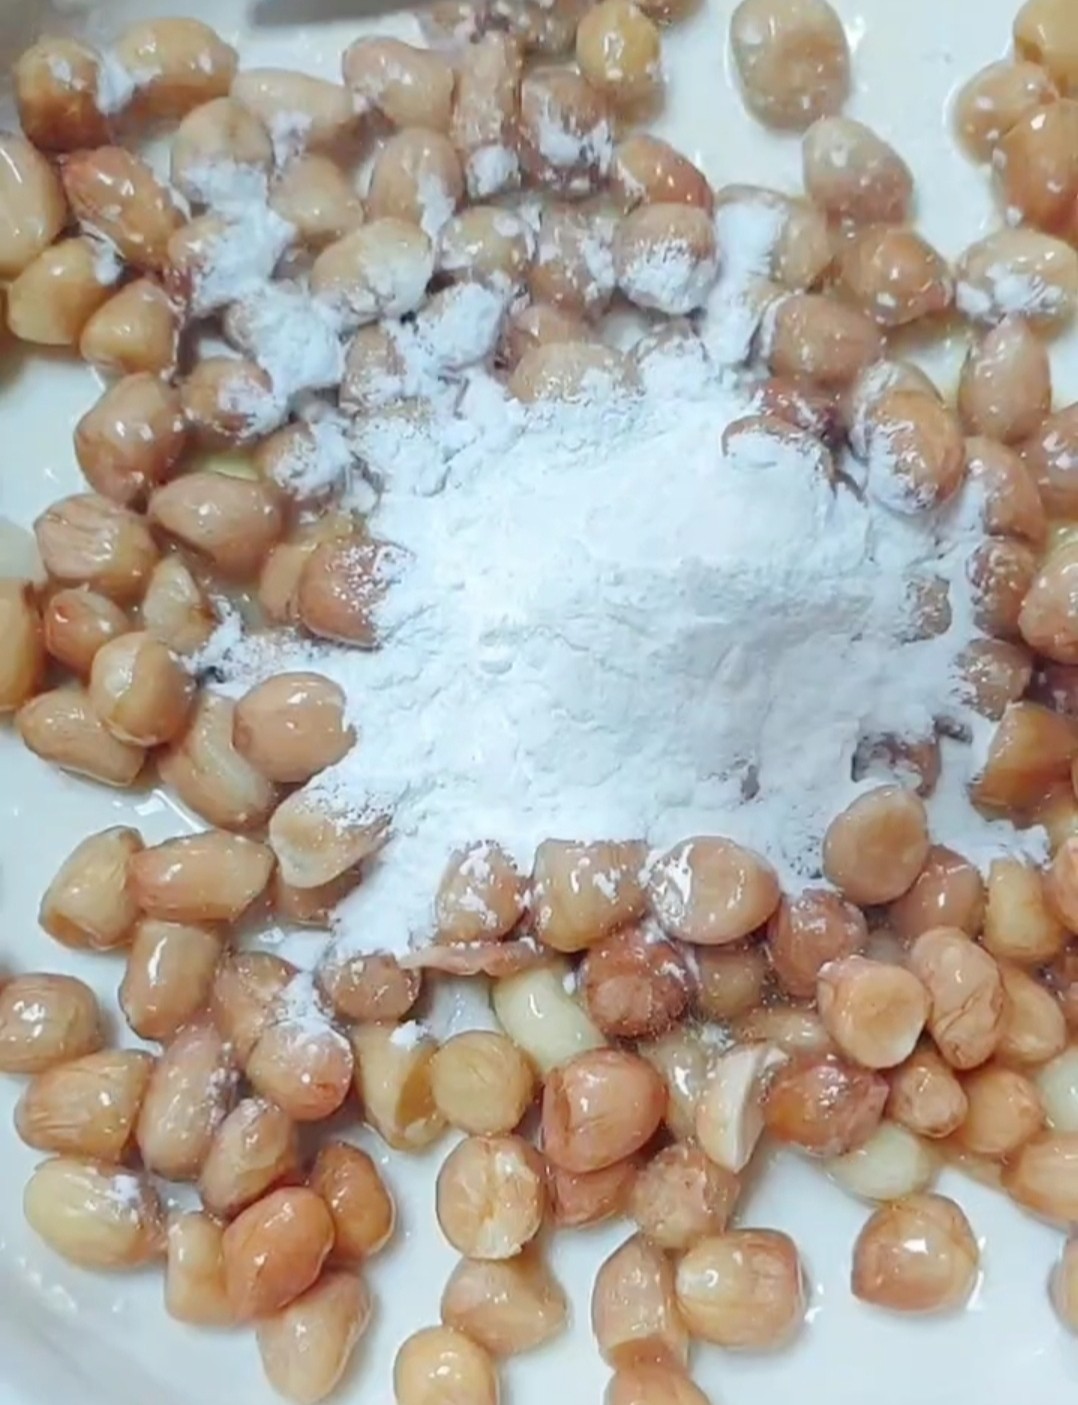 Weird Peanuts recipe